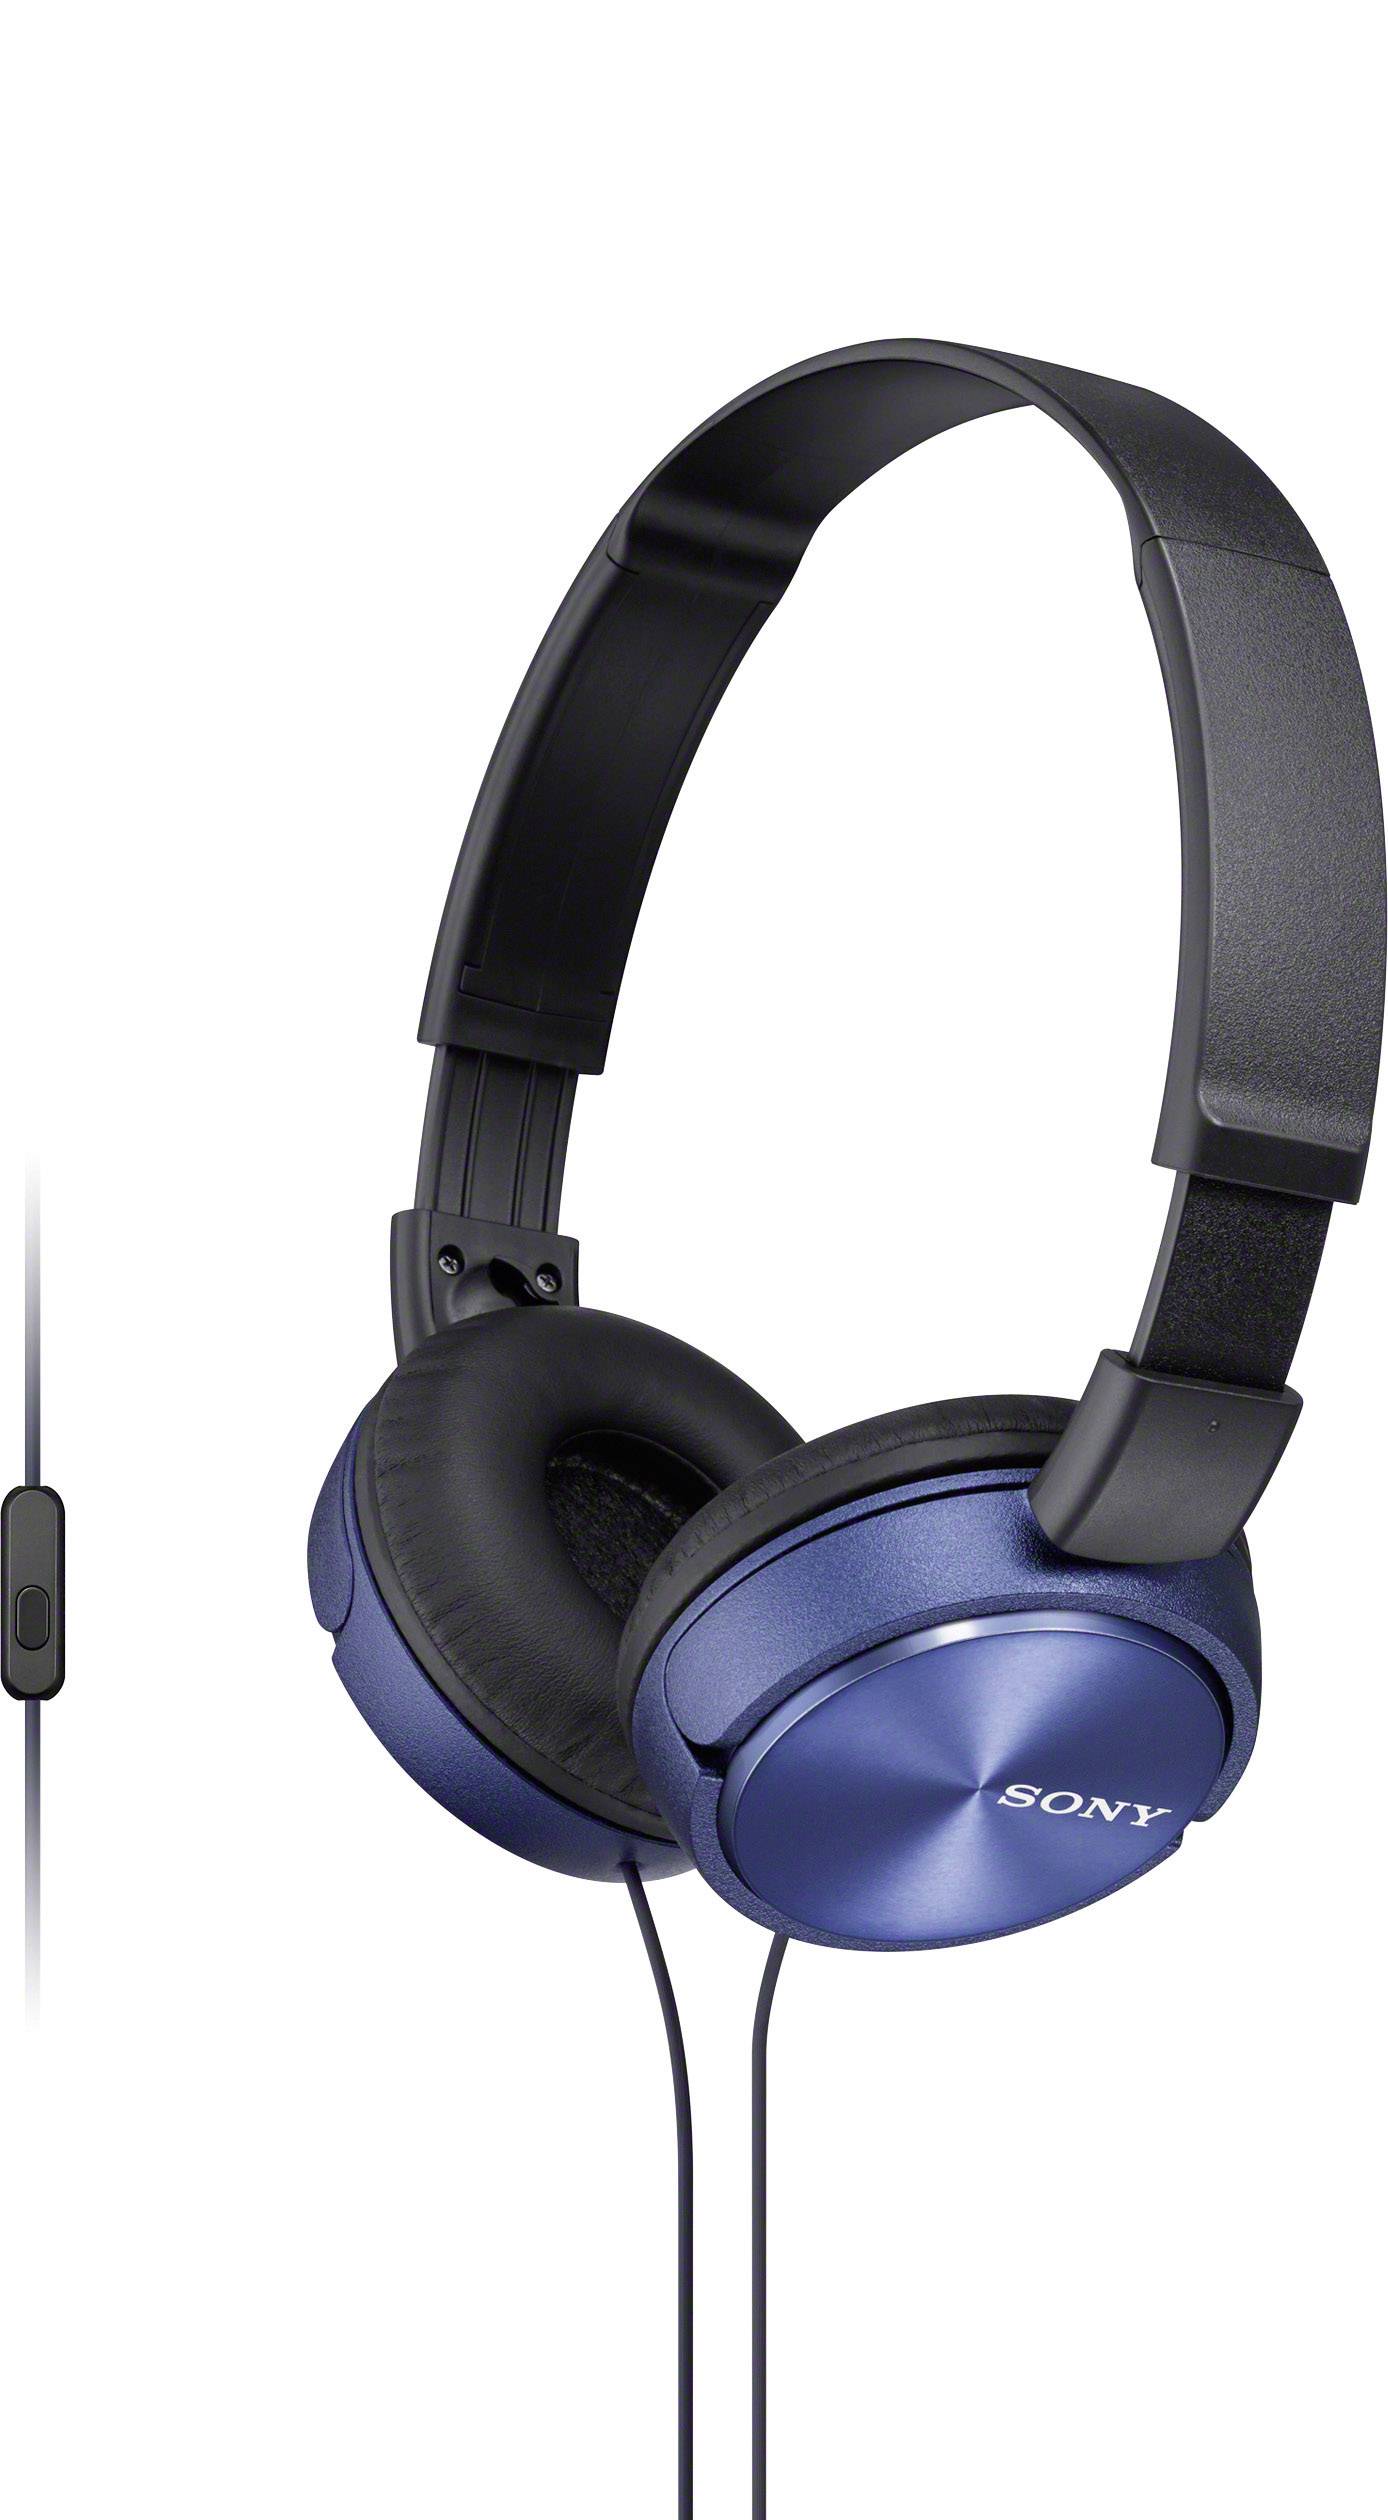 Sony MDR-ZX310AP Headset, Ear kabelgebunden Kopfhörer Schweiz Faltbar – Blau Conrad On Electronic